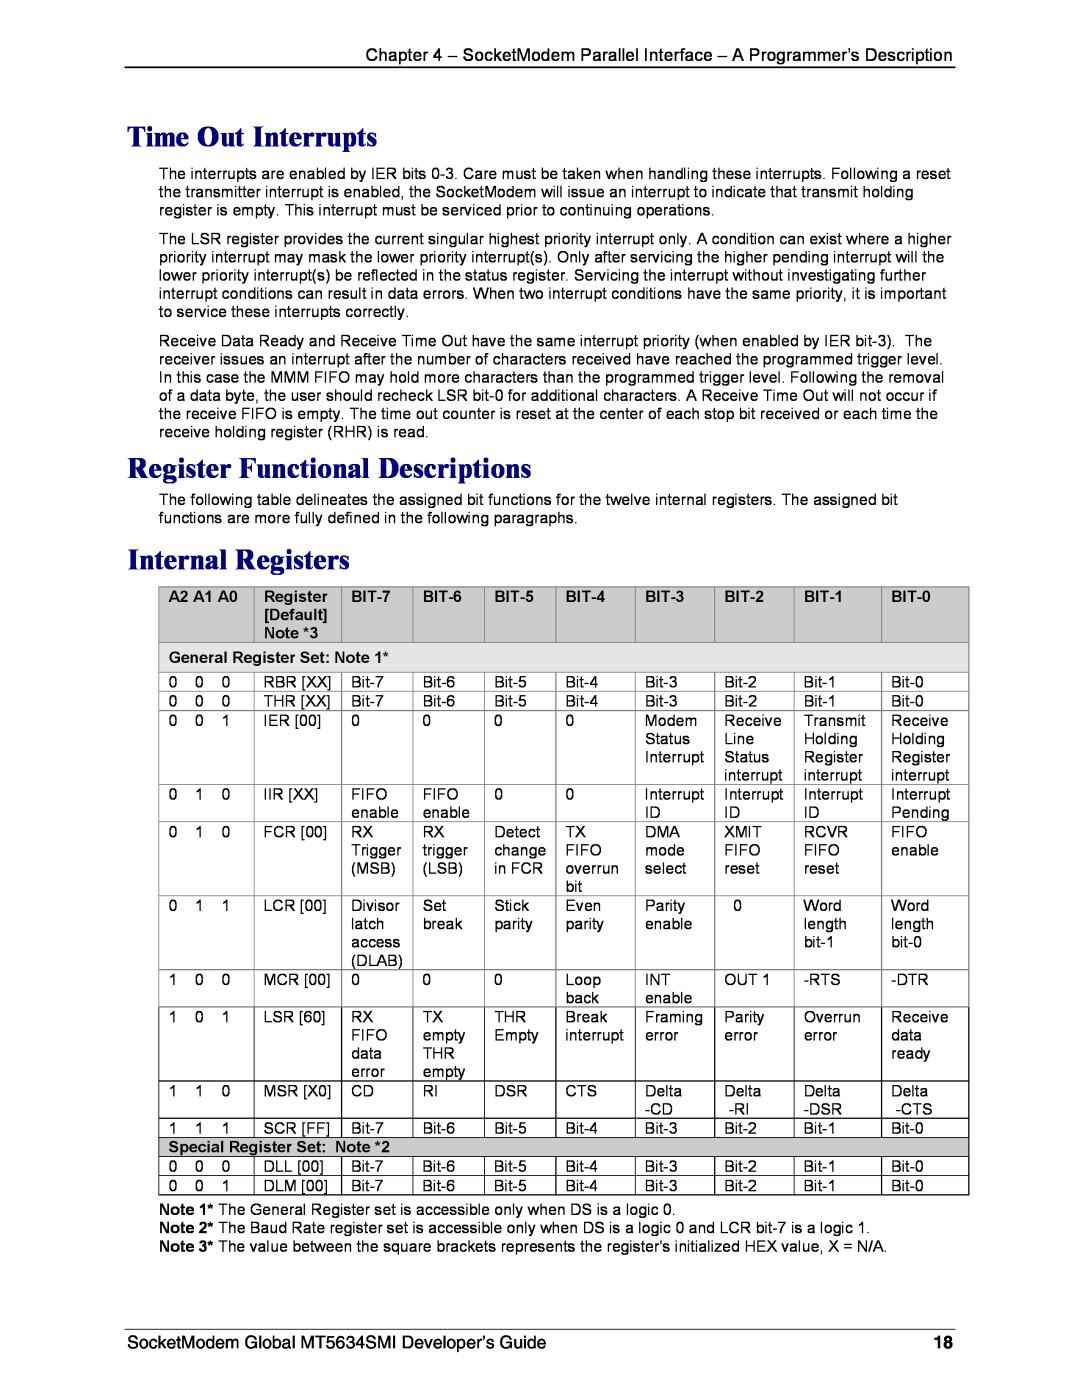 Technics MT5634SMI-92, MT5634SMI-34 manual Time Out Interrupts, Register Functional Descriptions, Internal Registers 